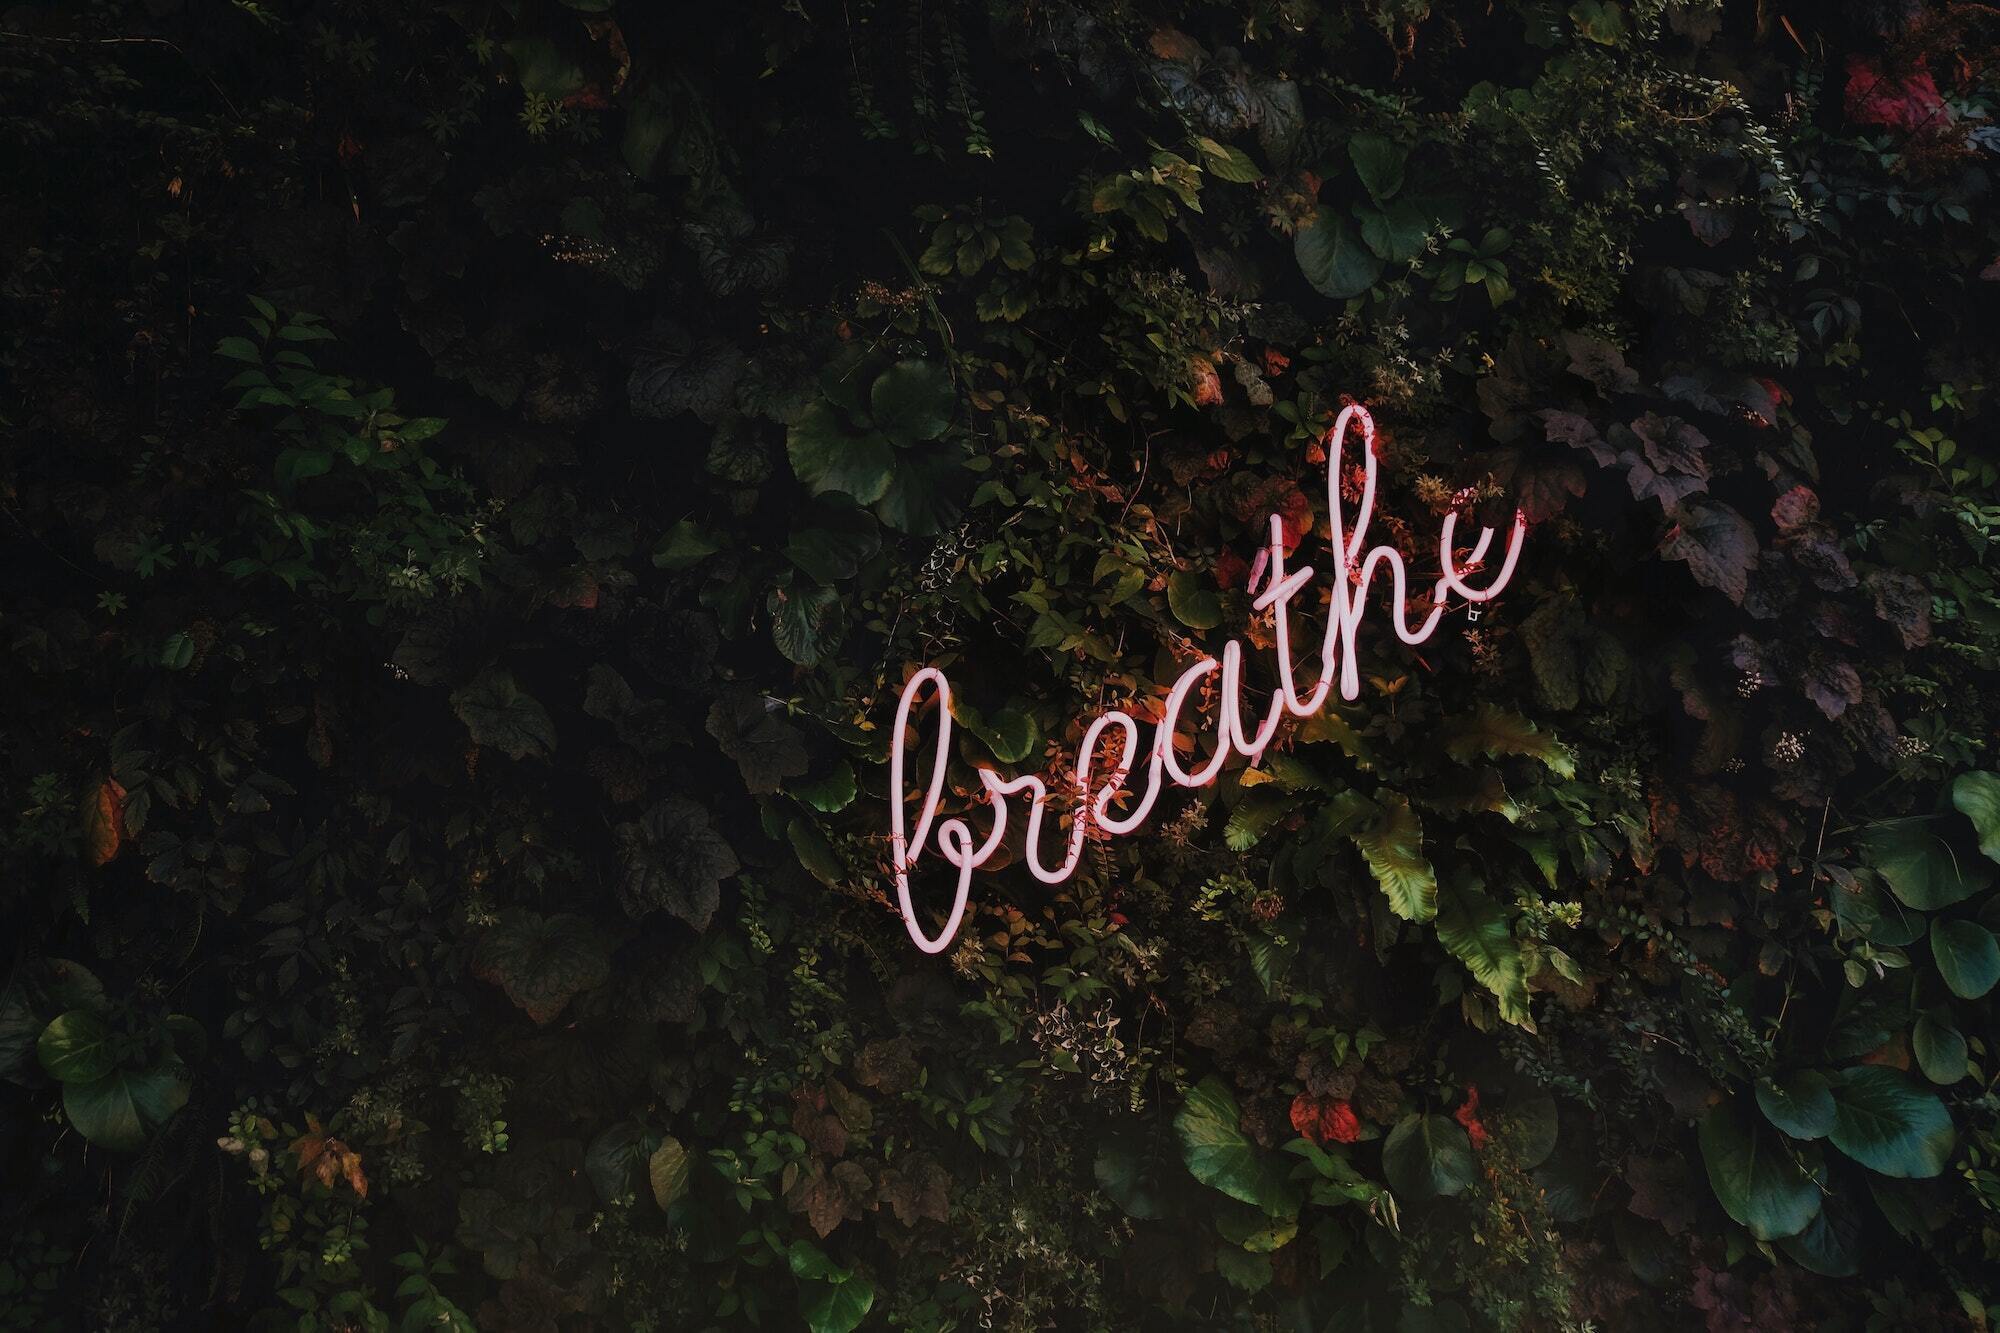 Neon "breathe" sign against foliage